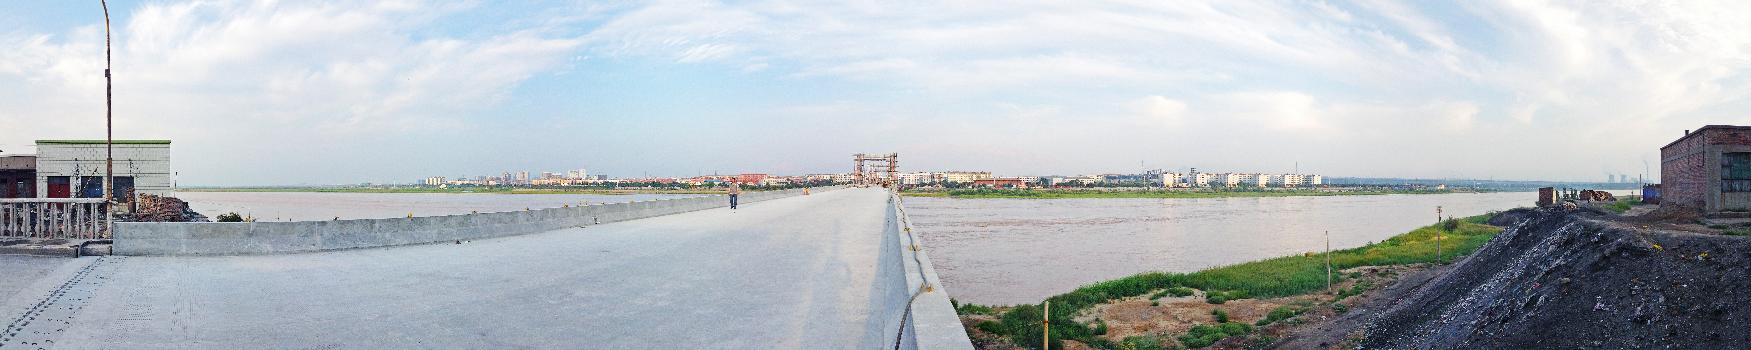 G109 Yellow River Bridge